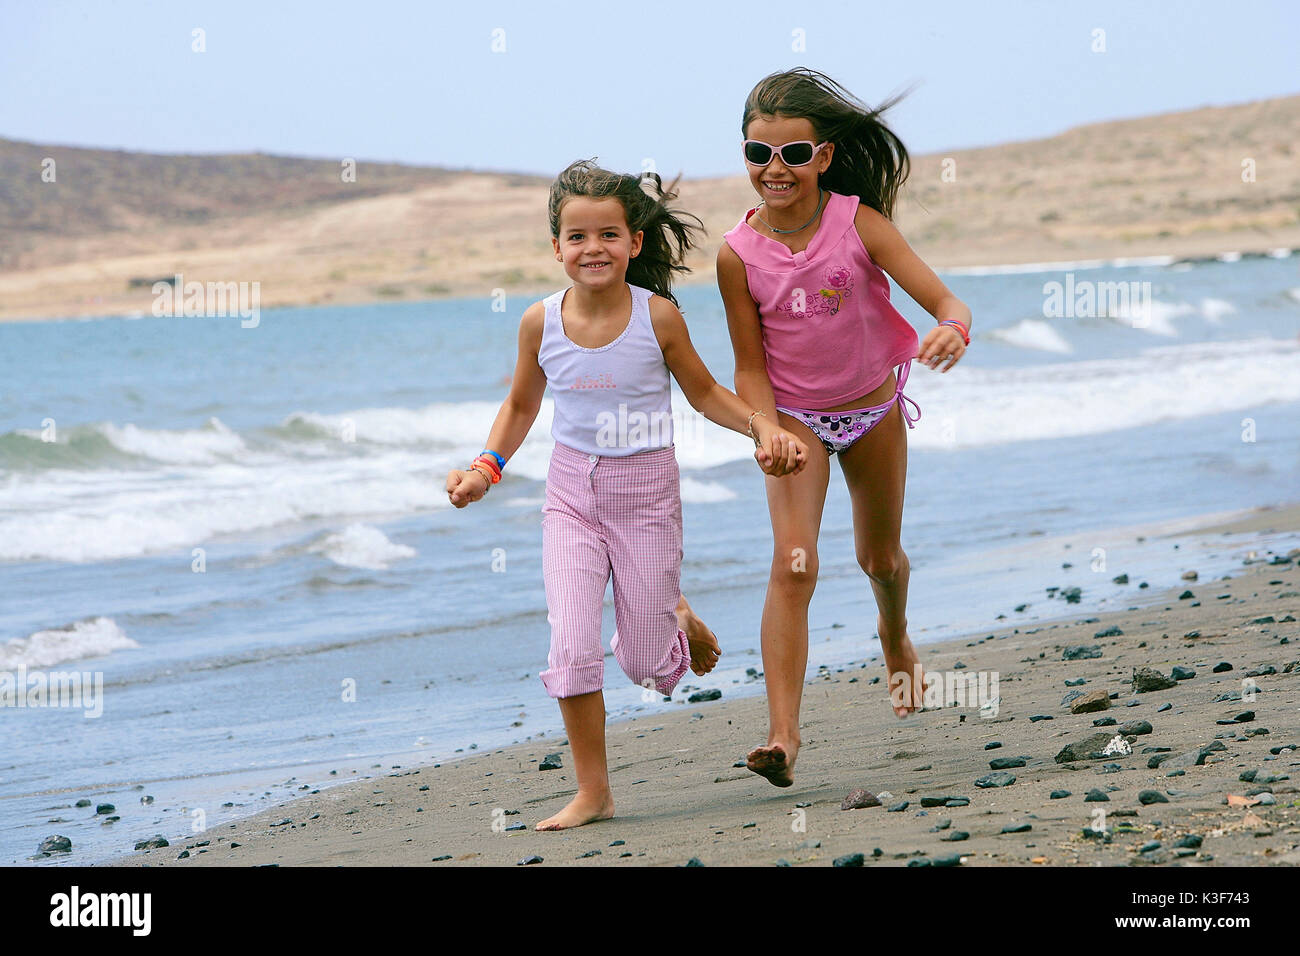 Two girls run at the beach Stock Photo